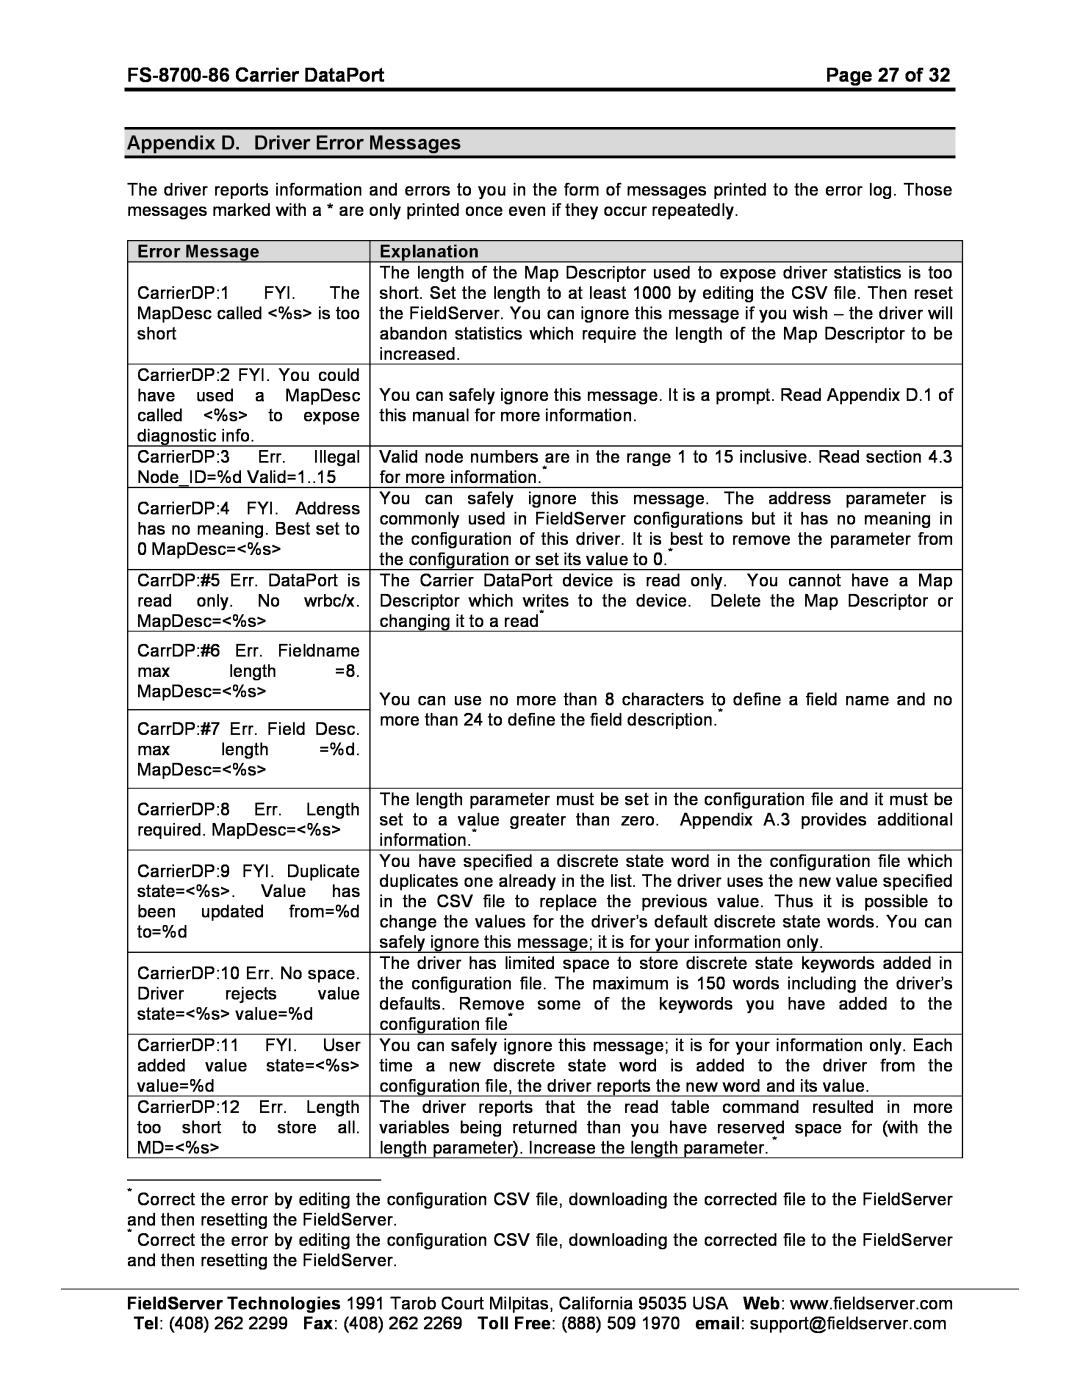 FieldServer instruction manual Page 27 of, Appendix D. Driver Error Messages, FS-8700-86 Carrier DataPort 